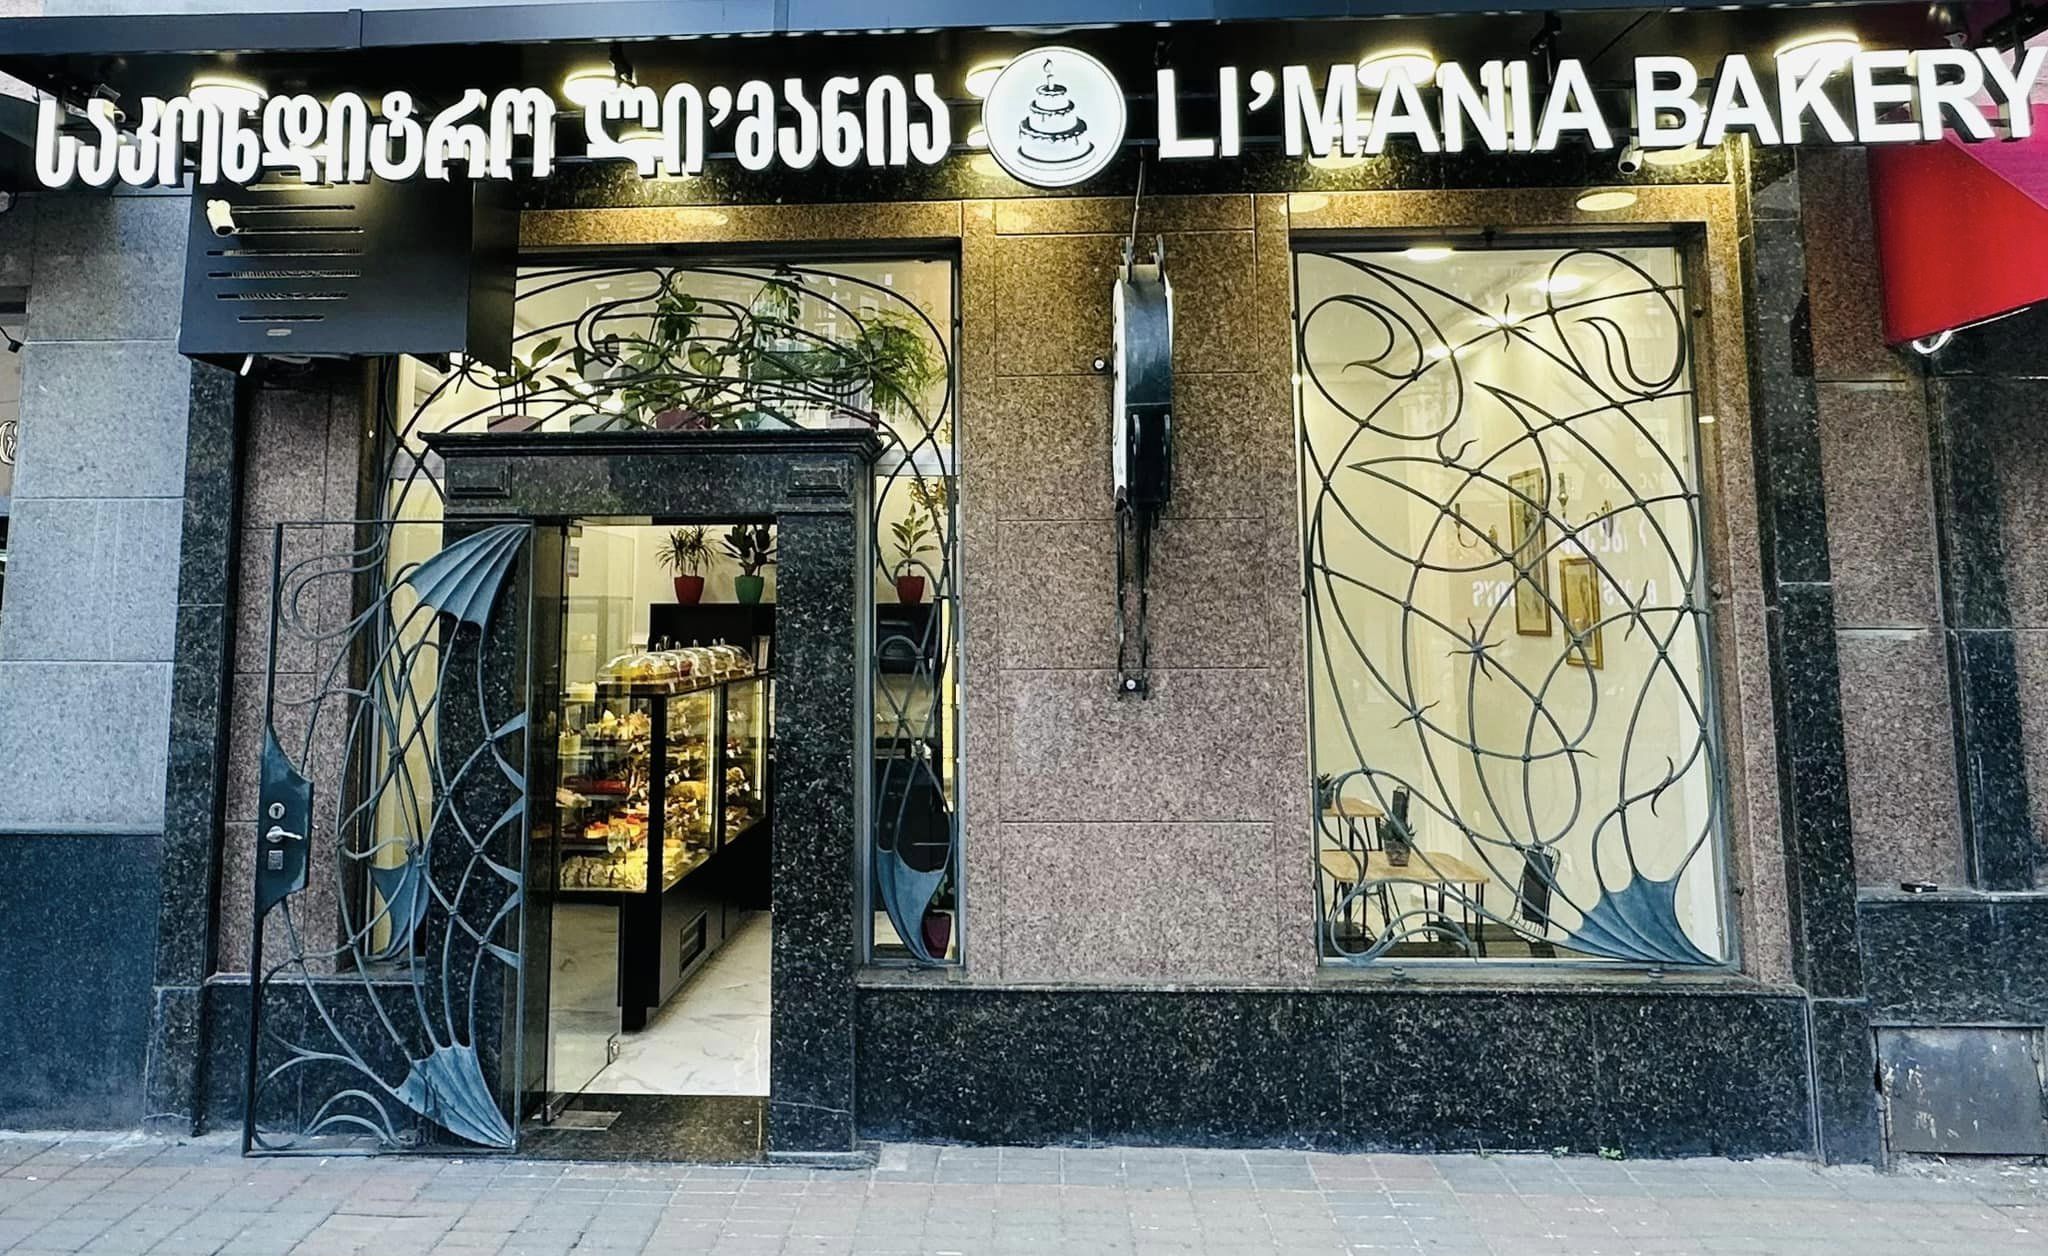 Li'mania Bakery